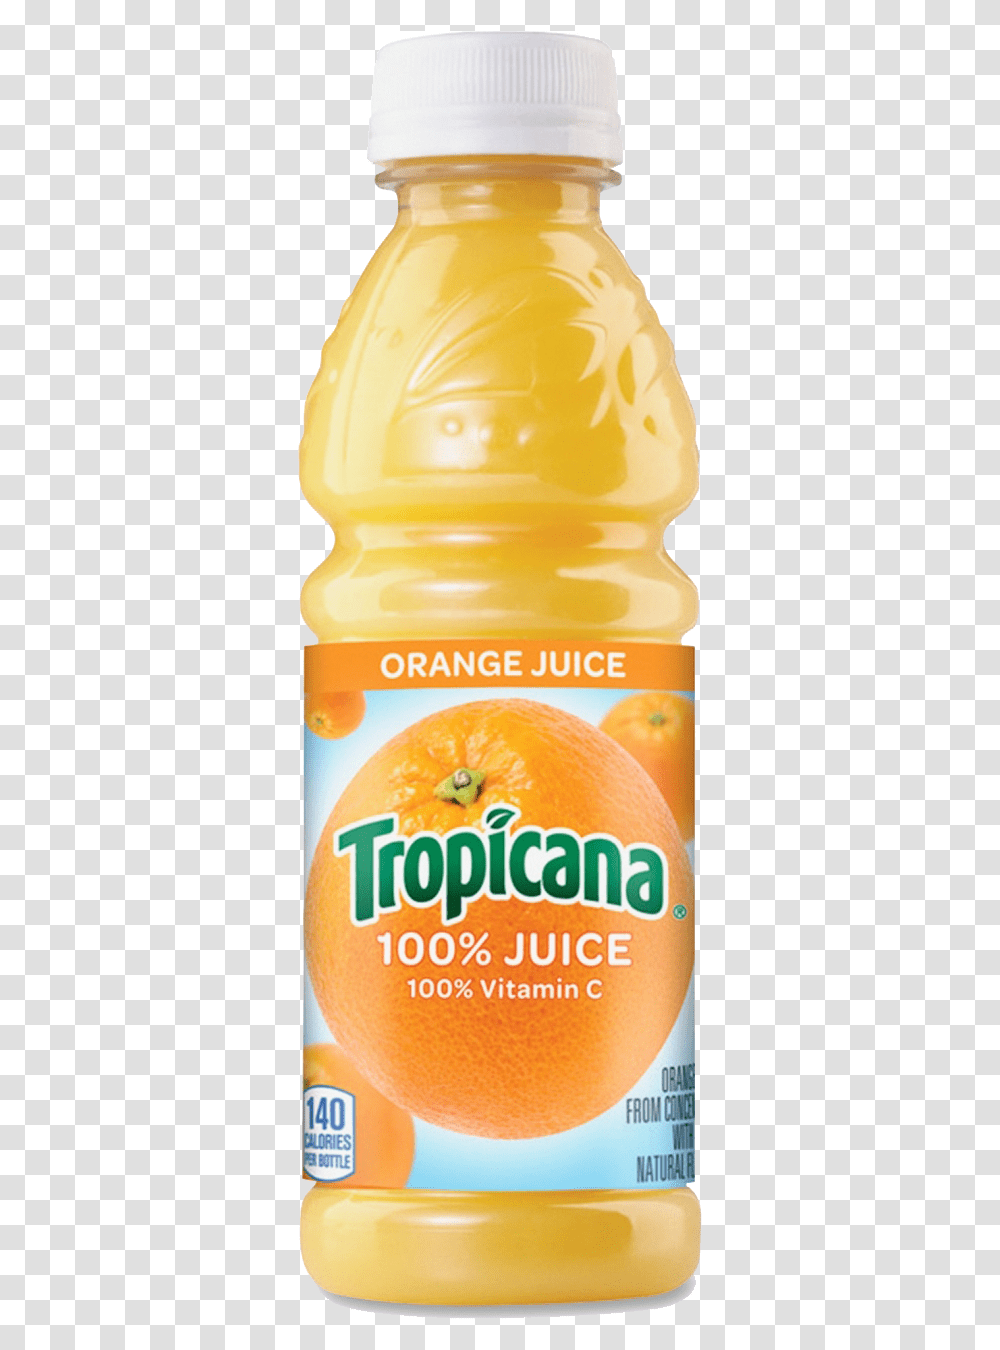 Tropicana Juice Free Picture Orange Juice Bottle, Beverage, Drink, Beer, Alcohol Transparent Png